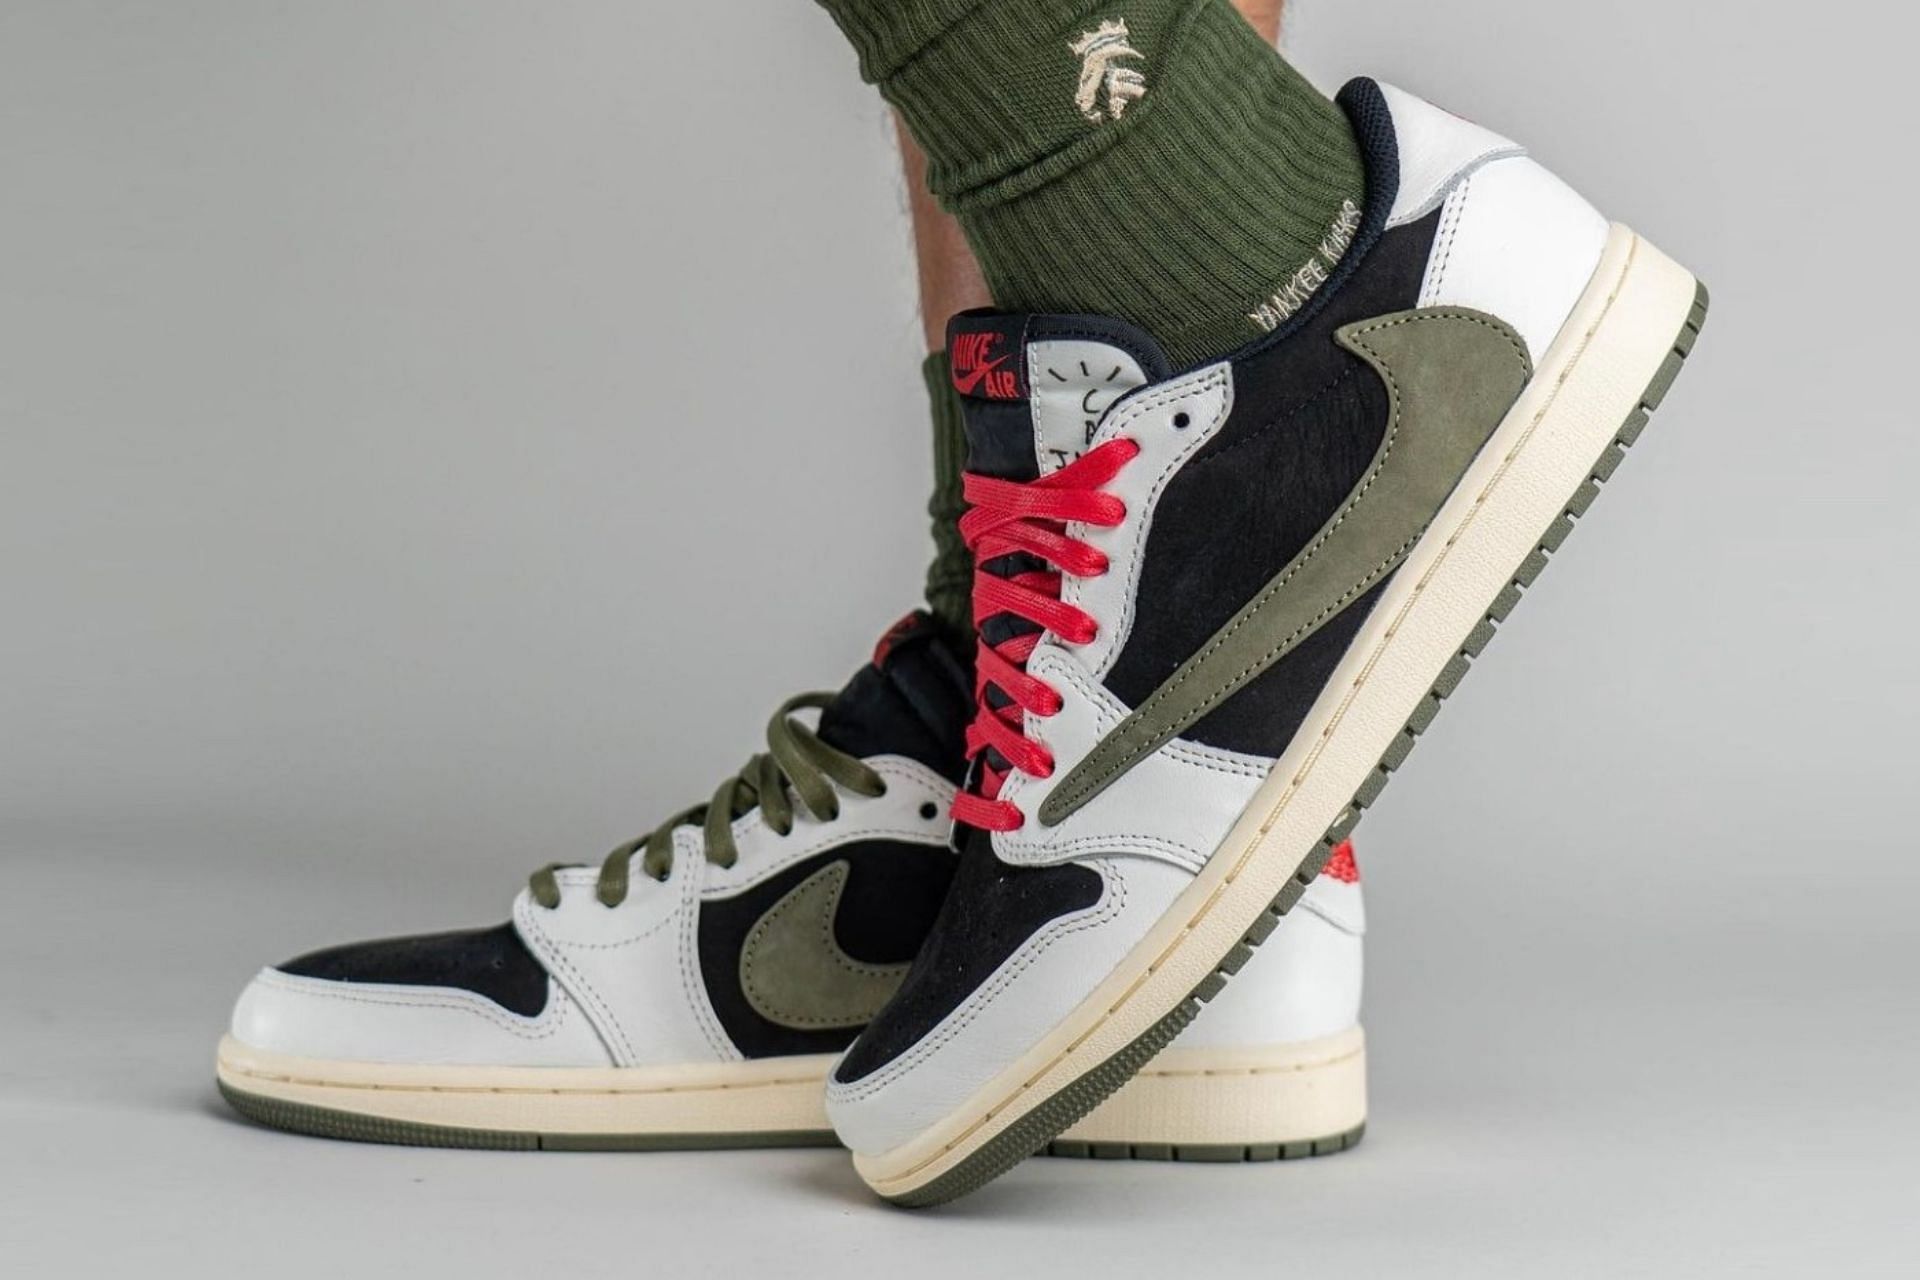 Travis Scott x Air Jordan 1 Low &quot;Olive&quot; sneakers (Image via @yankeekicks / Twitter)